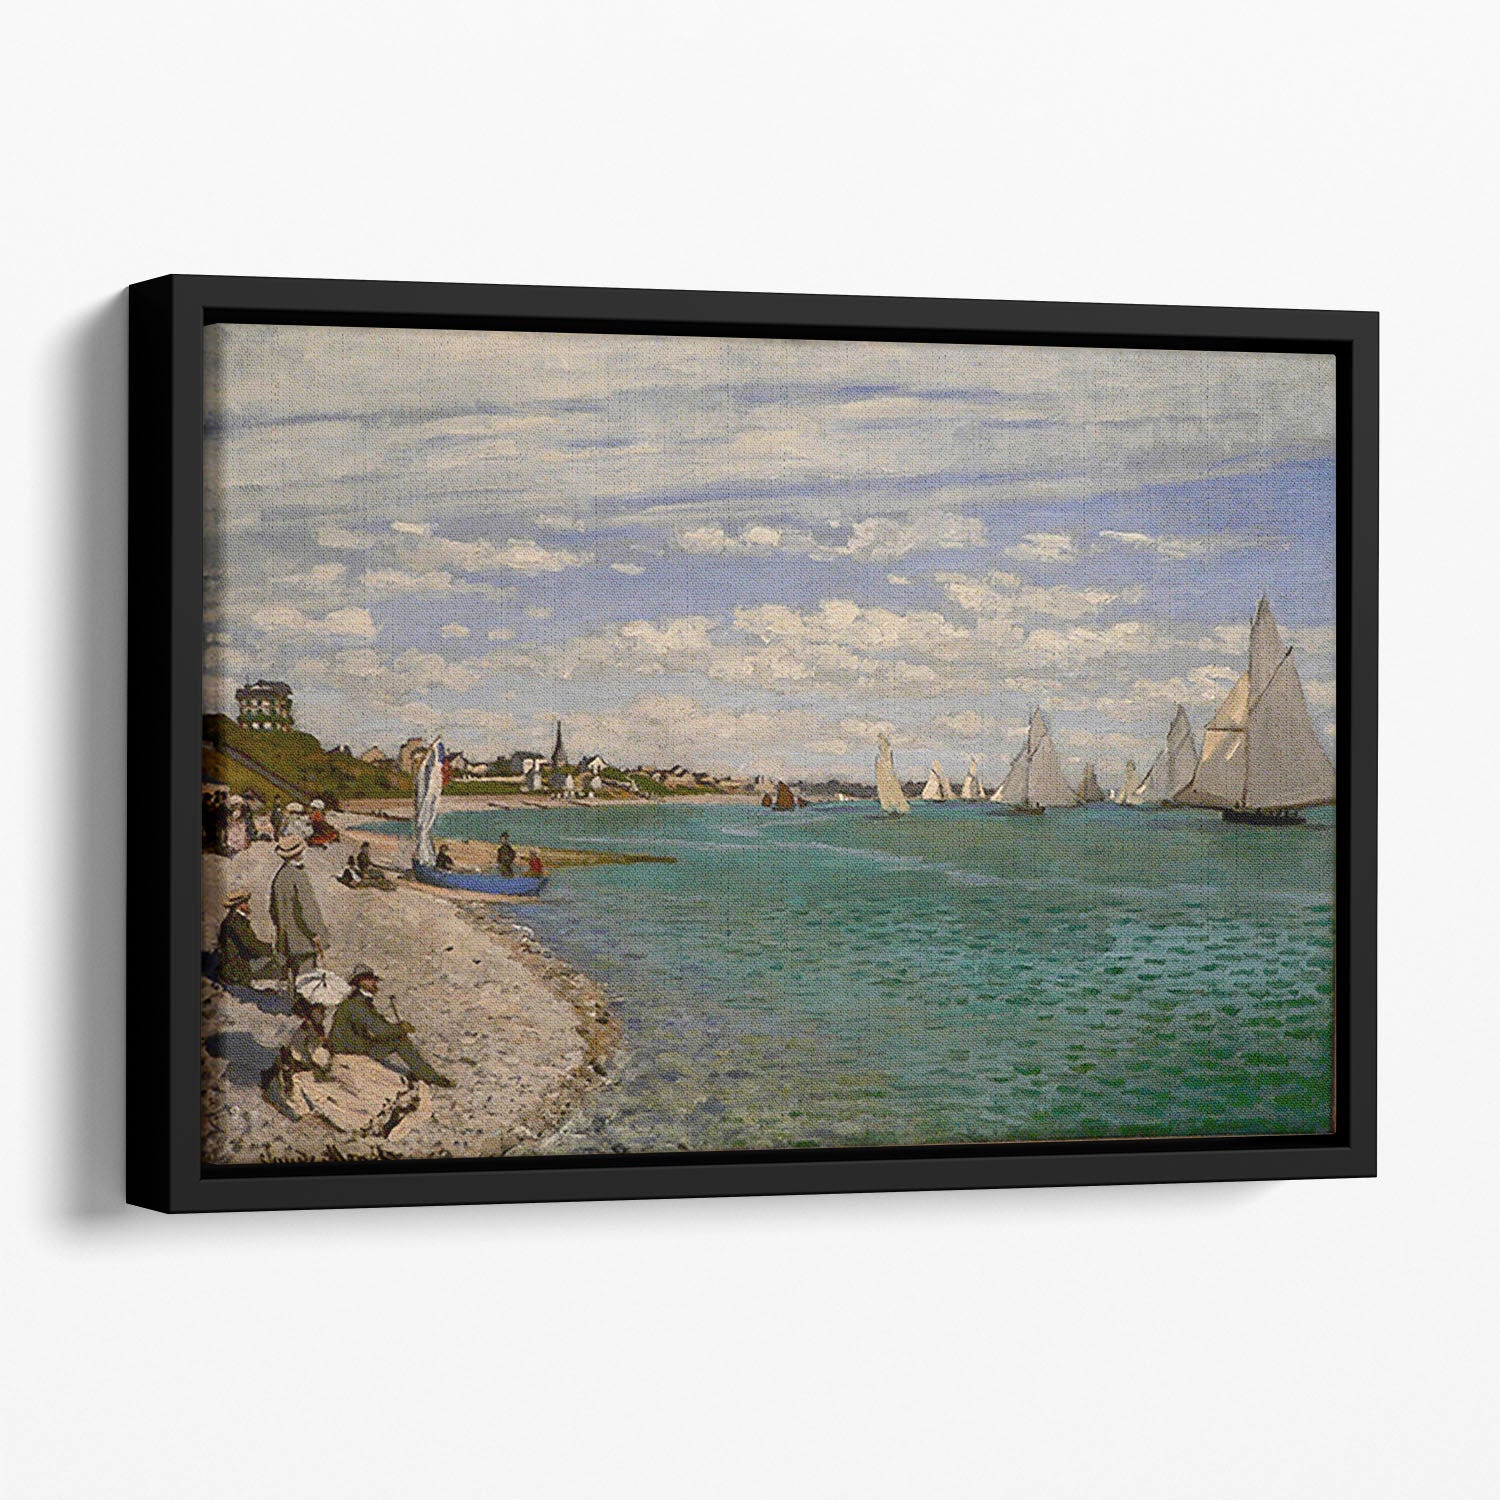 Regatta at St. Adresse by Monet Floating Framed Canvas